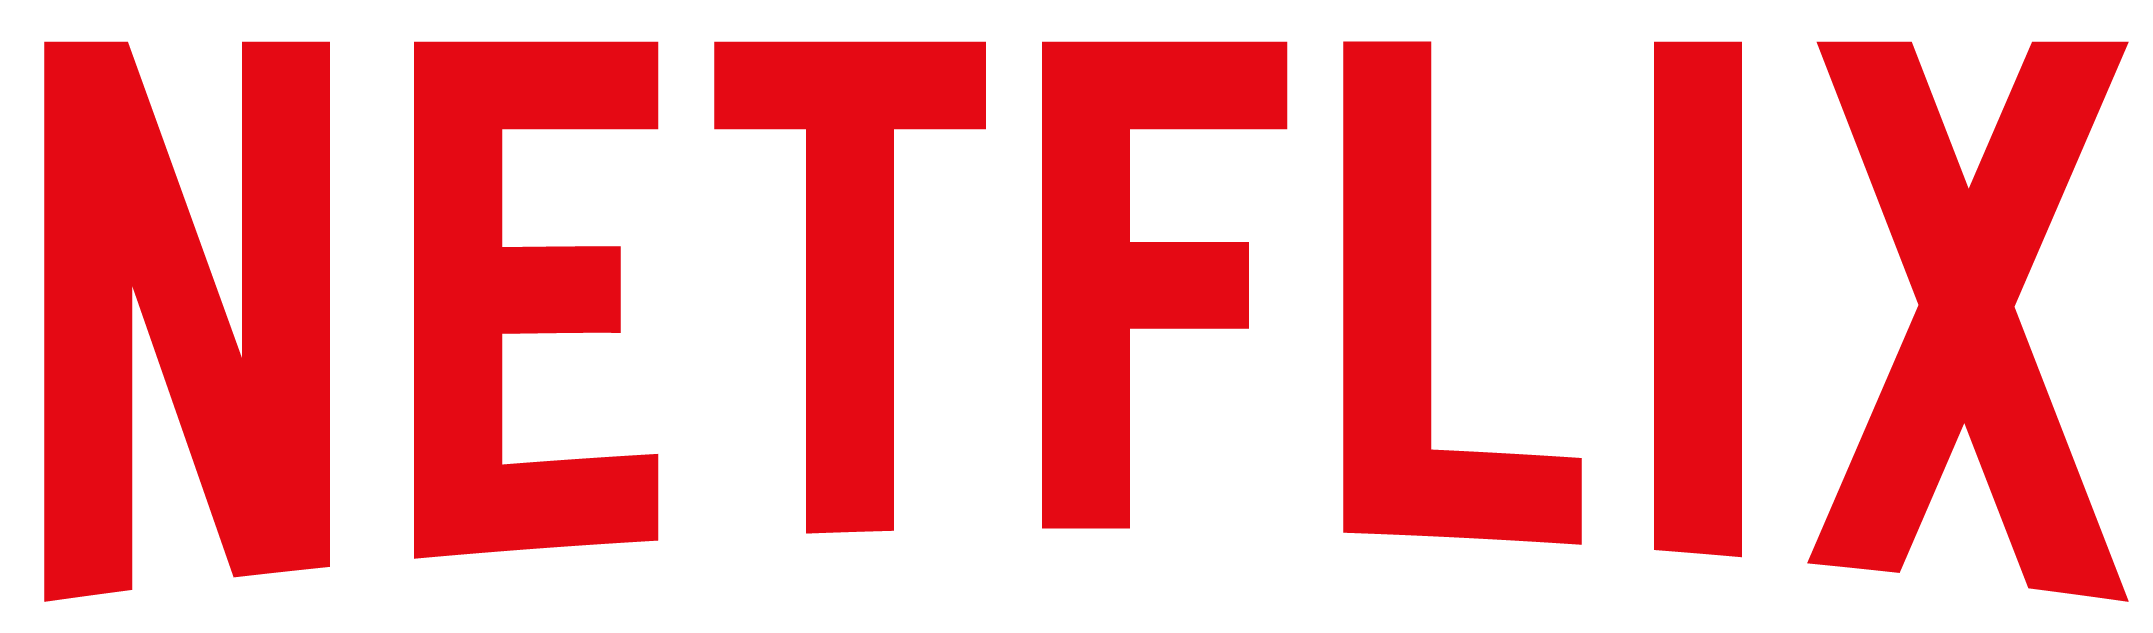 Ned Poulter: Entrepreneur & Digital Marketing Consultant - Red Netflix Logo